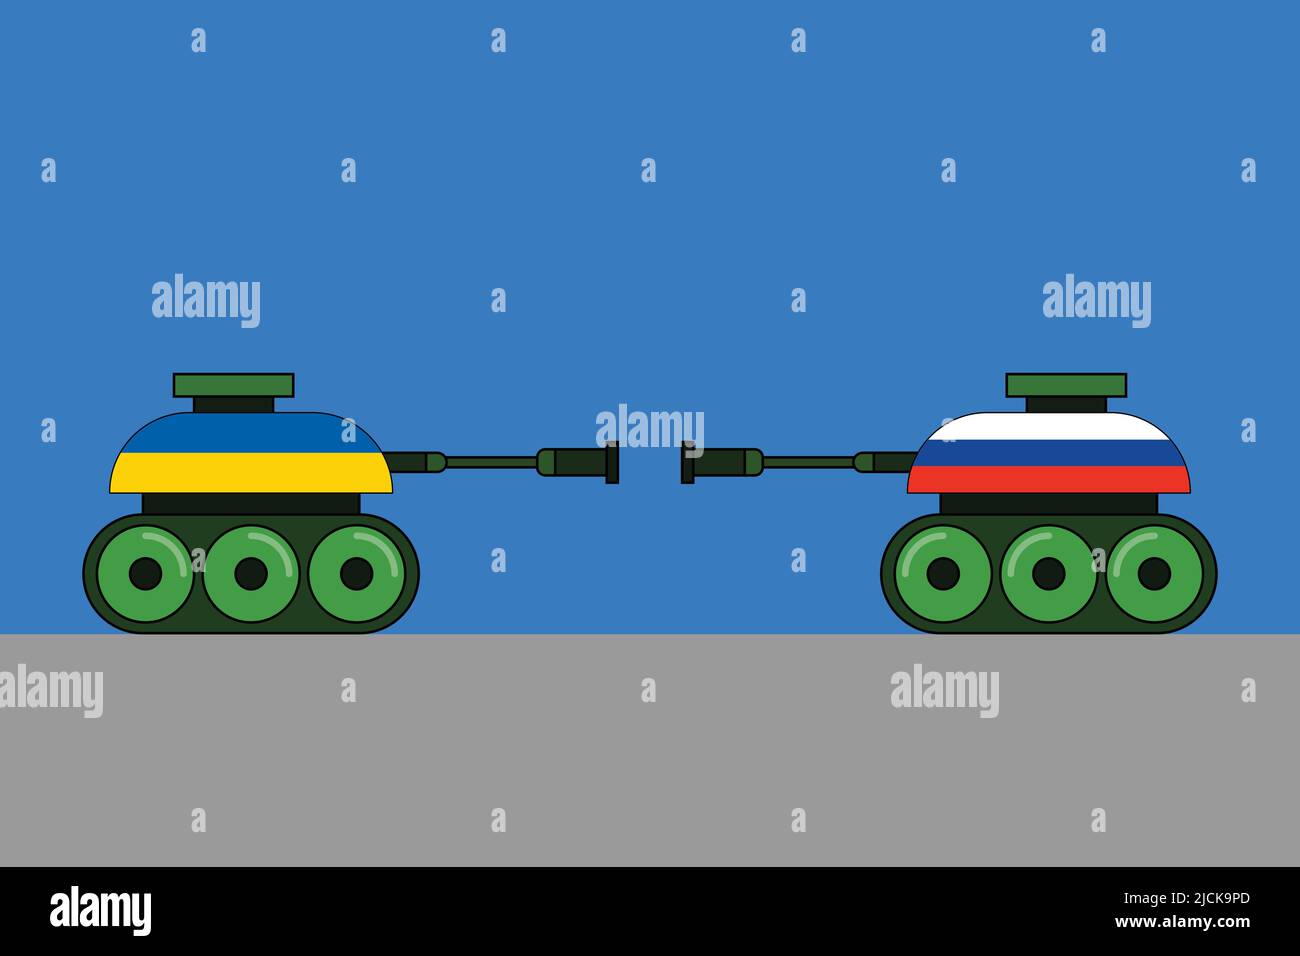 Tank ukrainien contre russe - illustration du vecteur de conflit russo-ukrainien Illustration de Vecteur